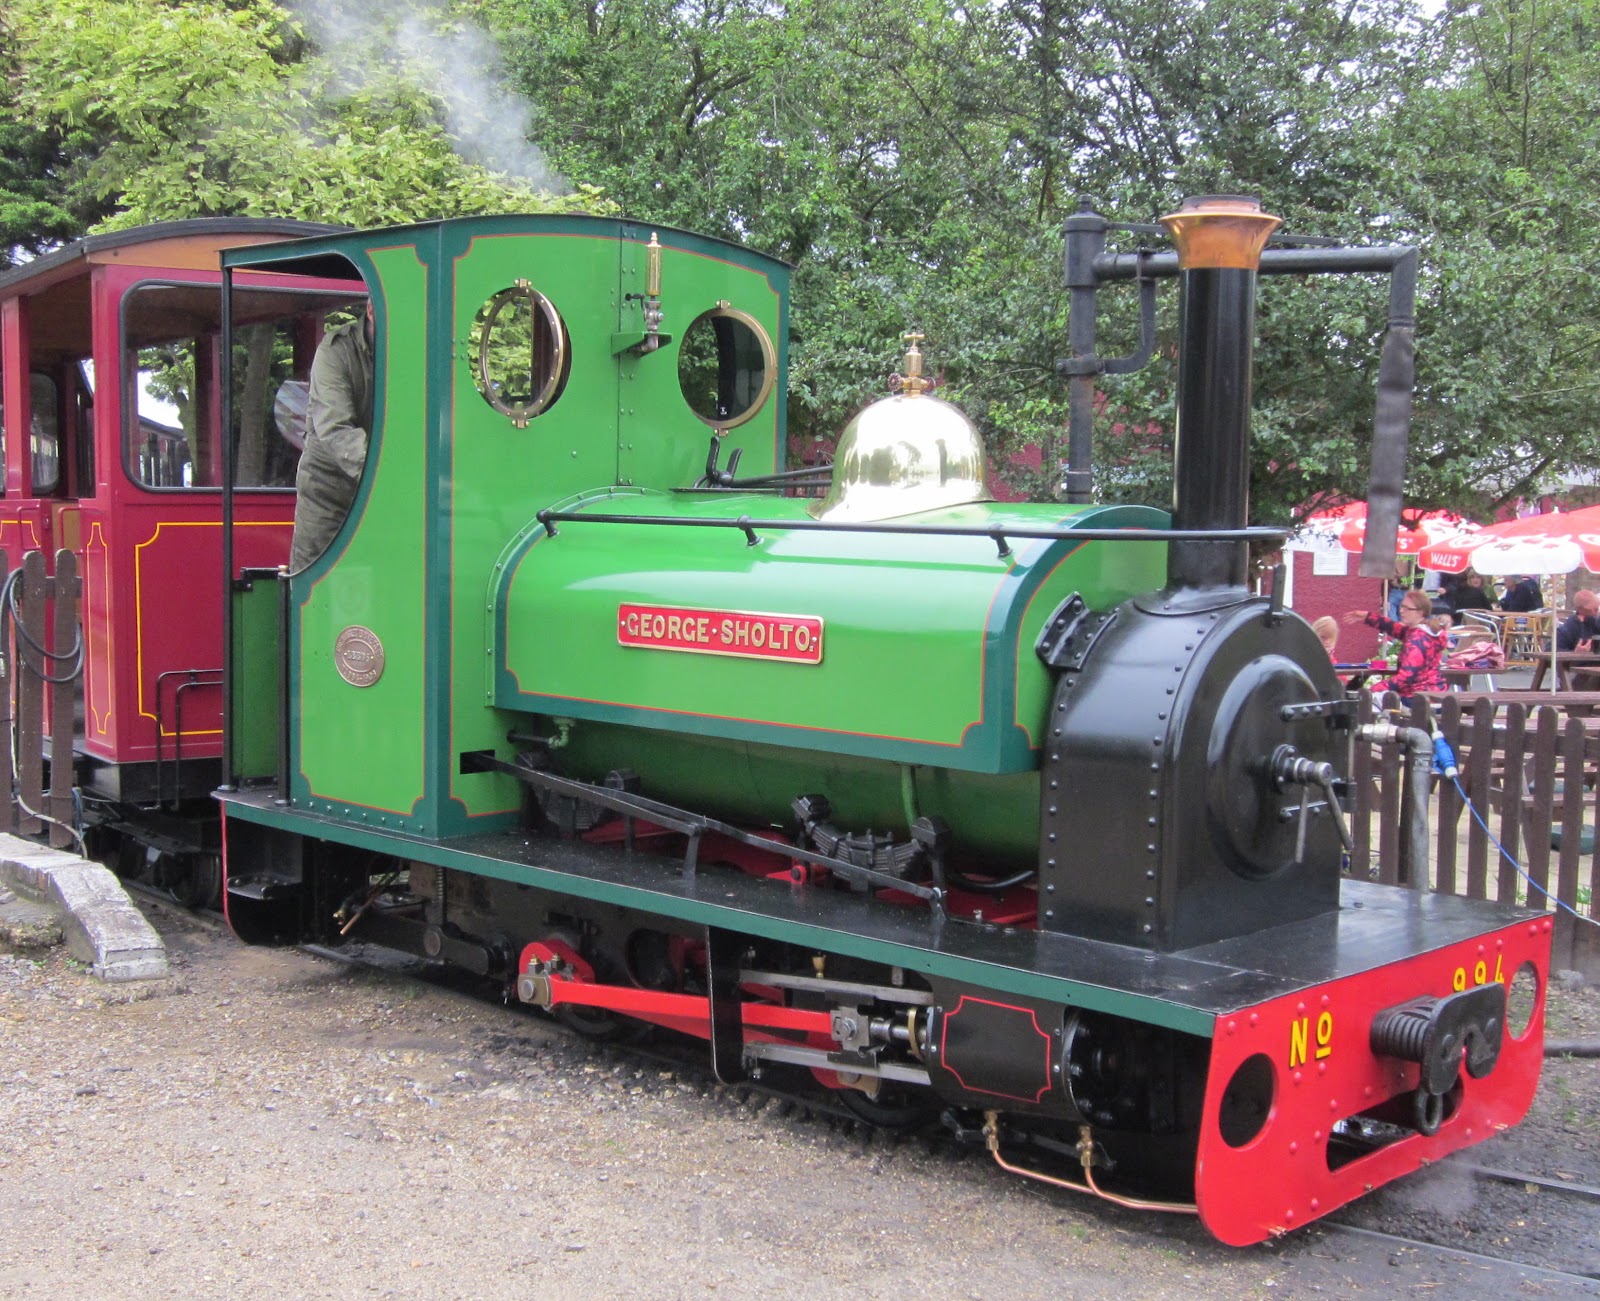 Narrow Gauge Railways UK: Bressingham Steam & Gardens